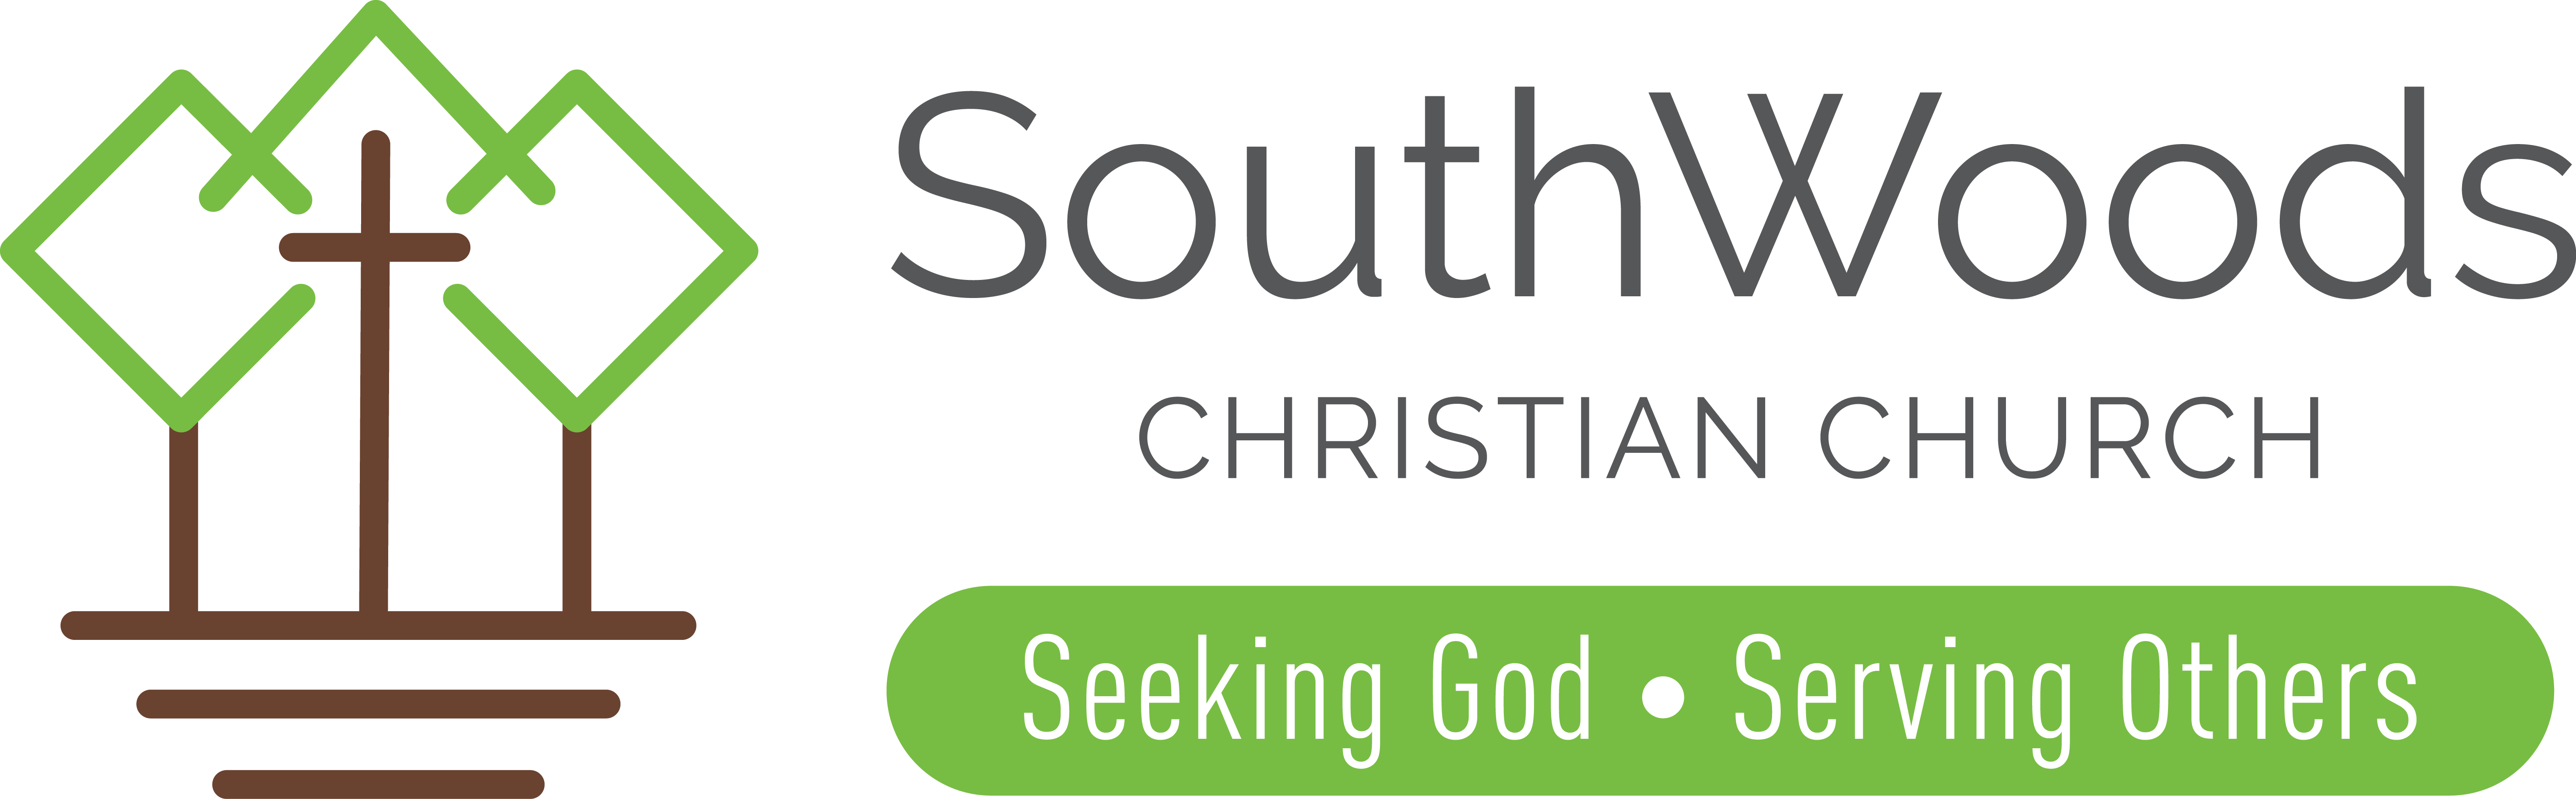 Southwoods Christian Church